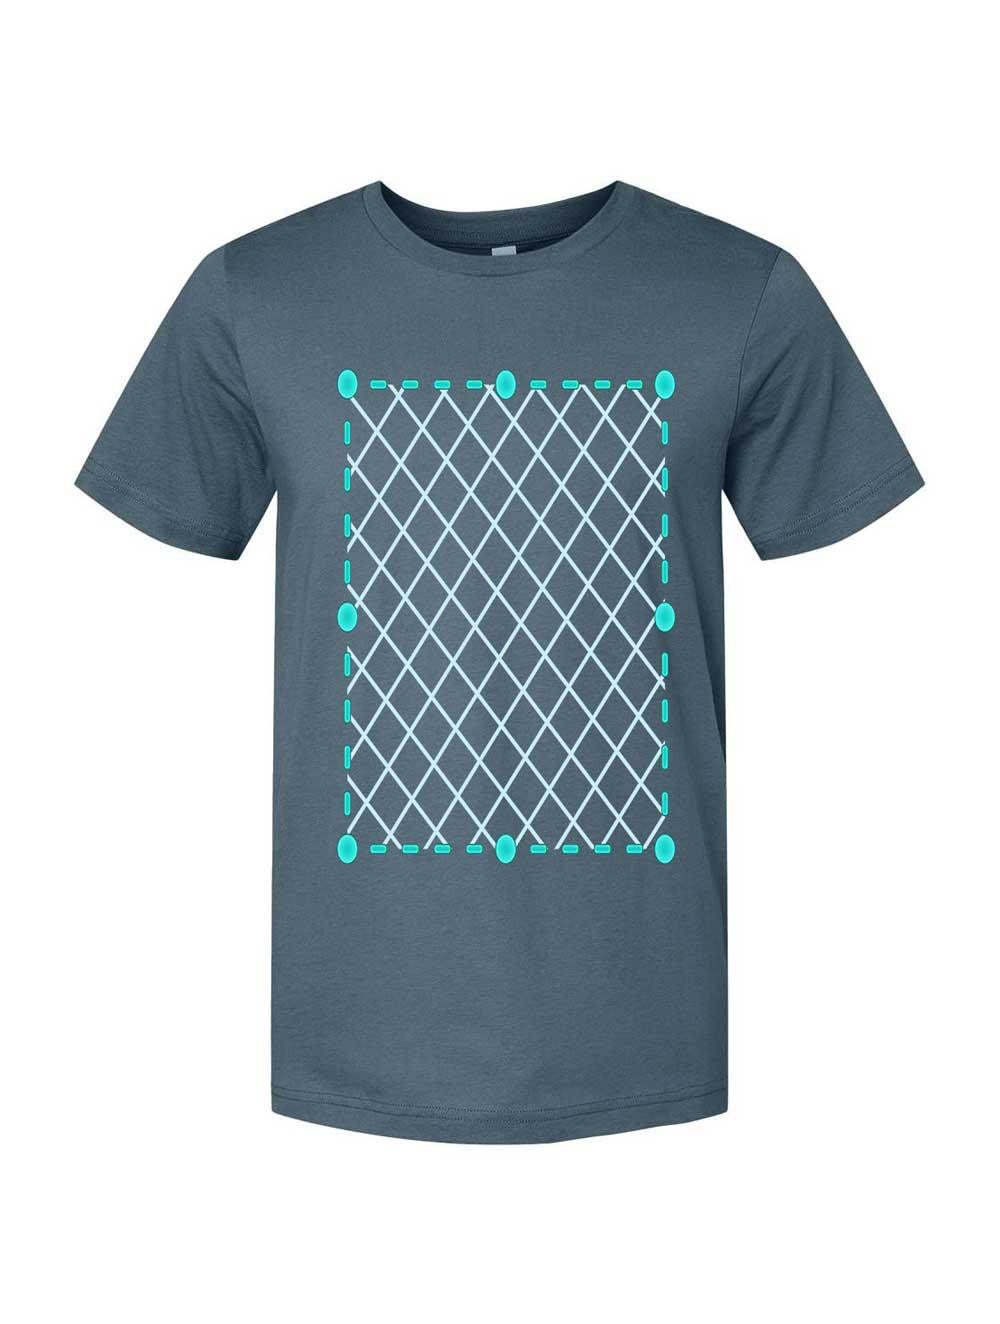 Bella + Canvas Unisex T-Shirt - Constantly Create Shop